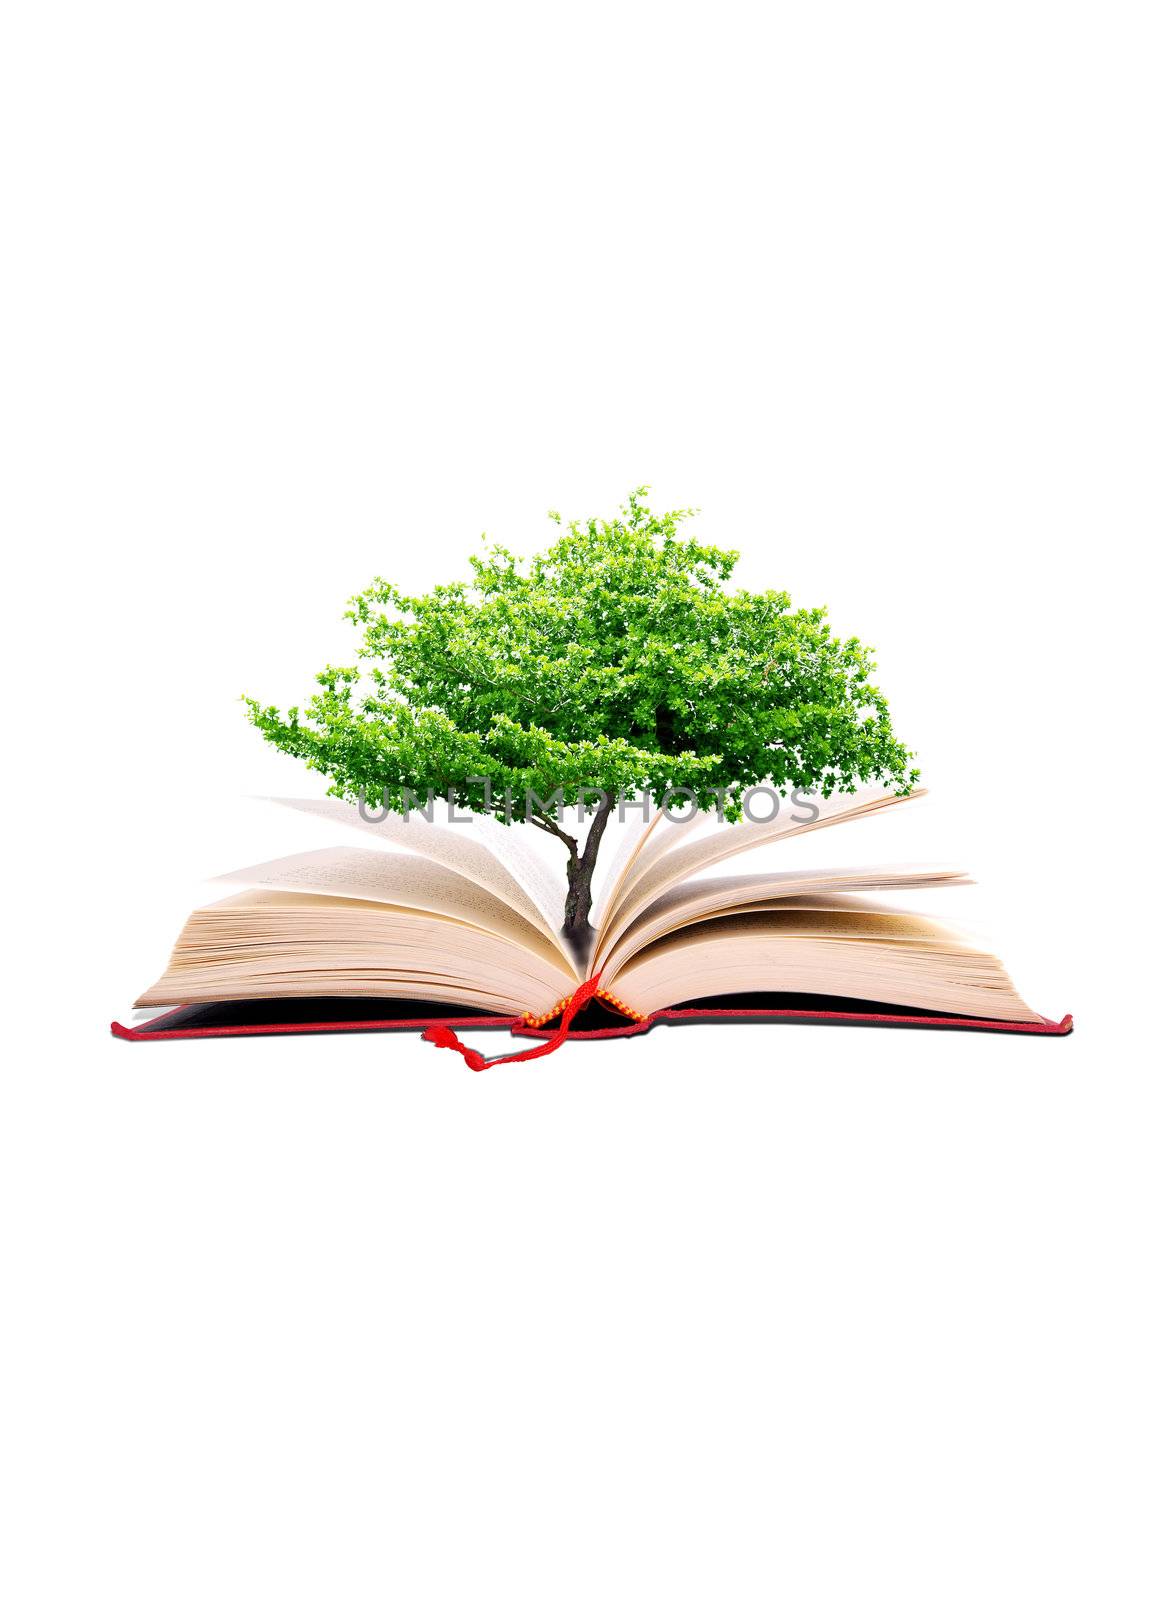 Green fresh tree in the big book